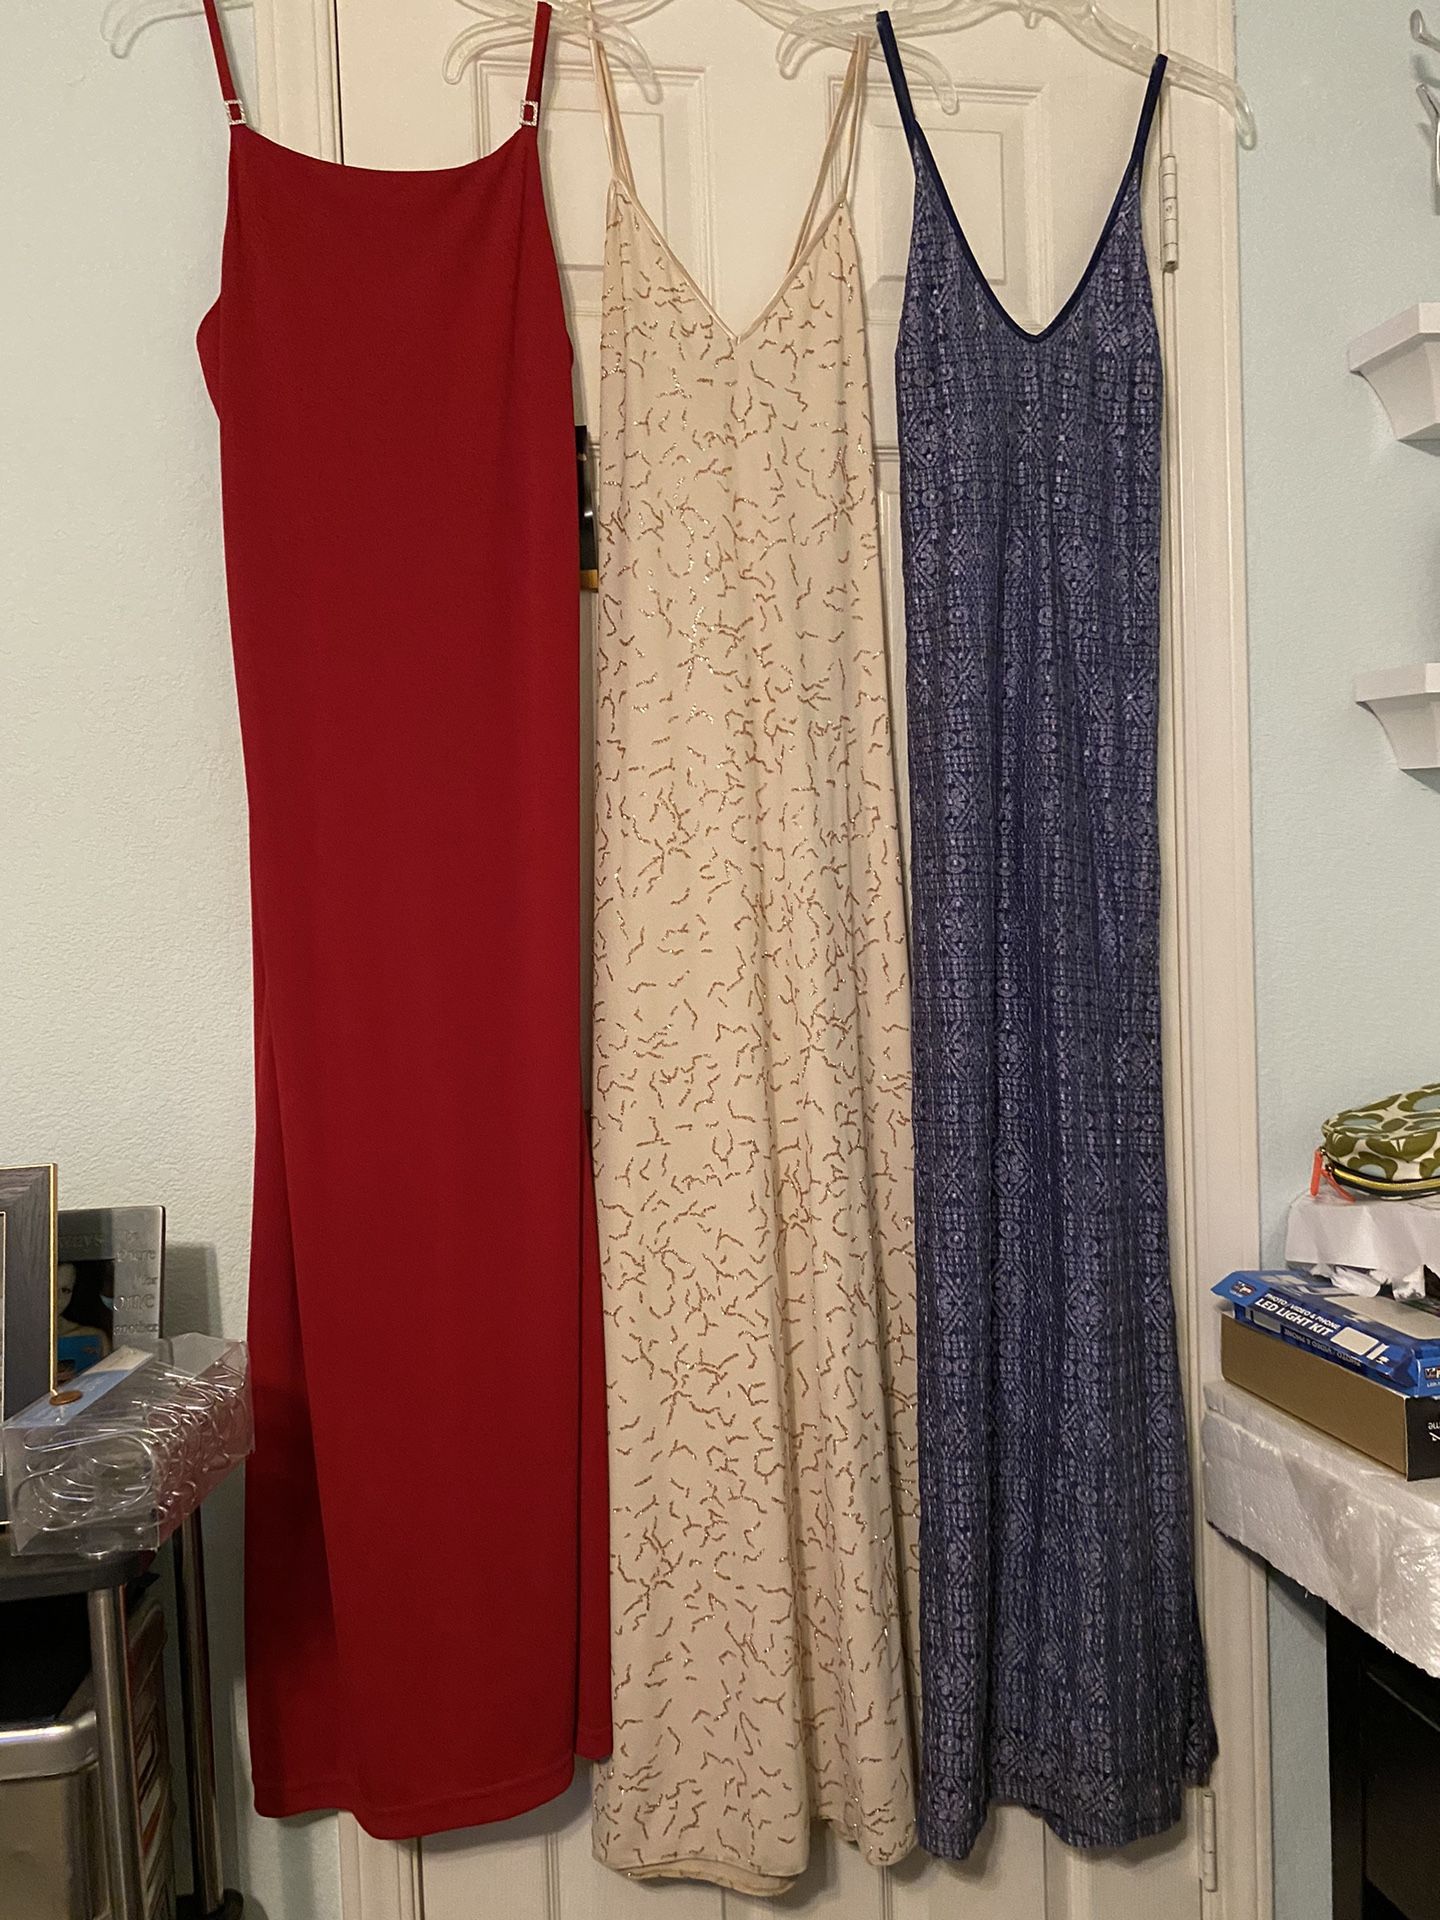 THREE Formal Dress Lot - Red, Gold Glitter, Purplish Lace Overlay Size large 10/12